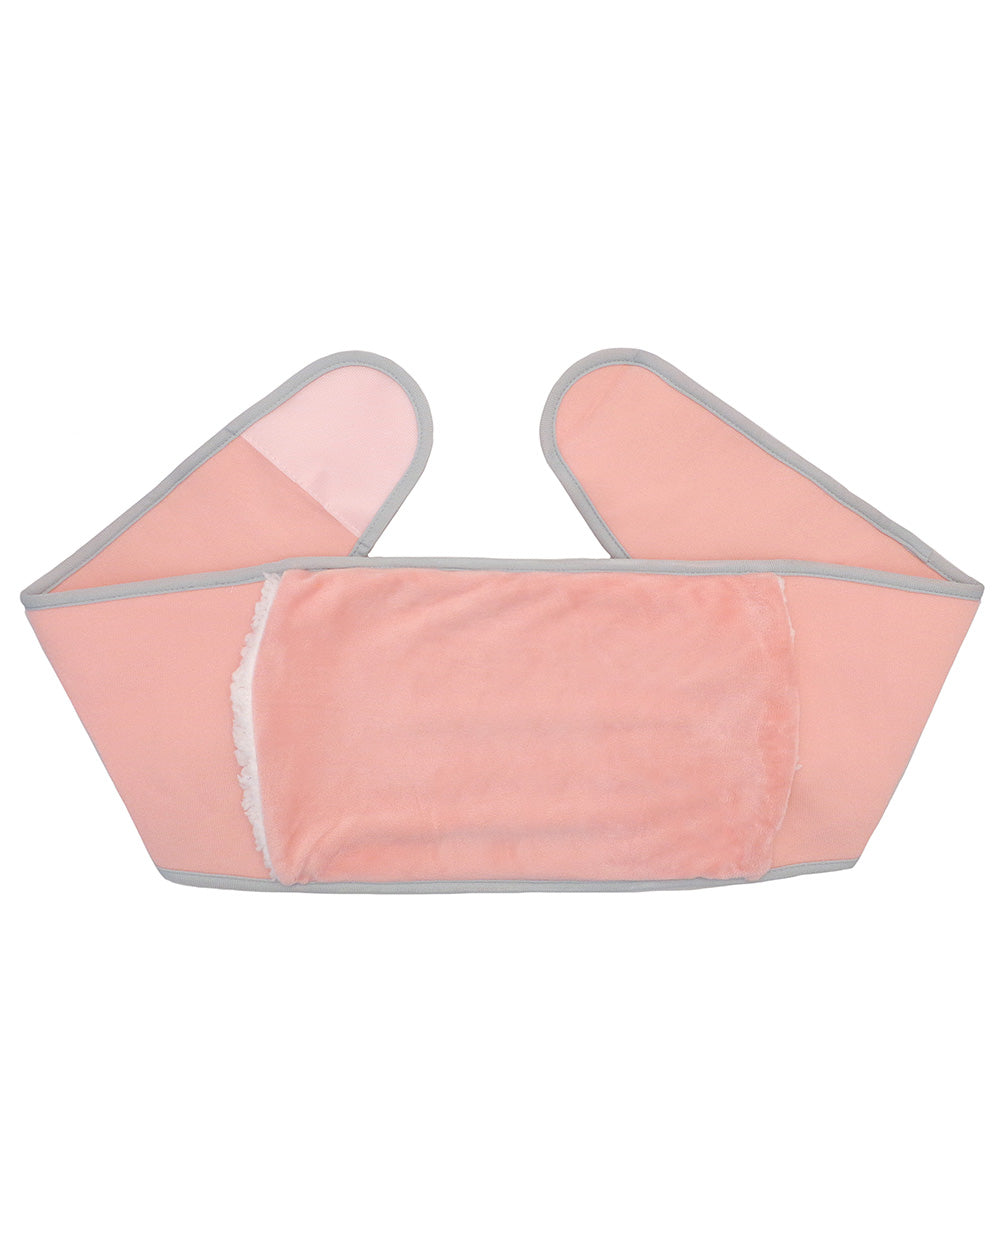 Hot Water Bottle Soft Body Wrap, Pink. Belt design